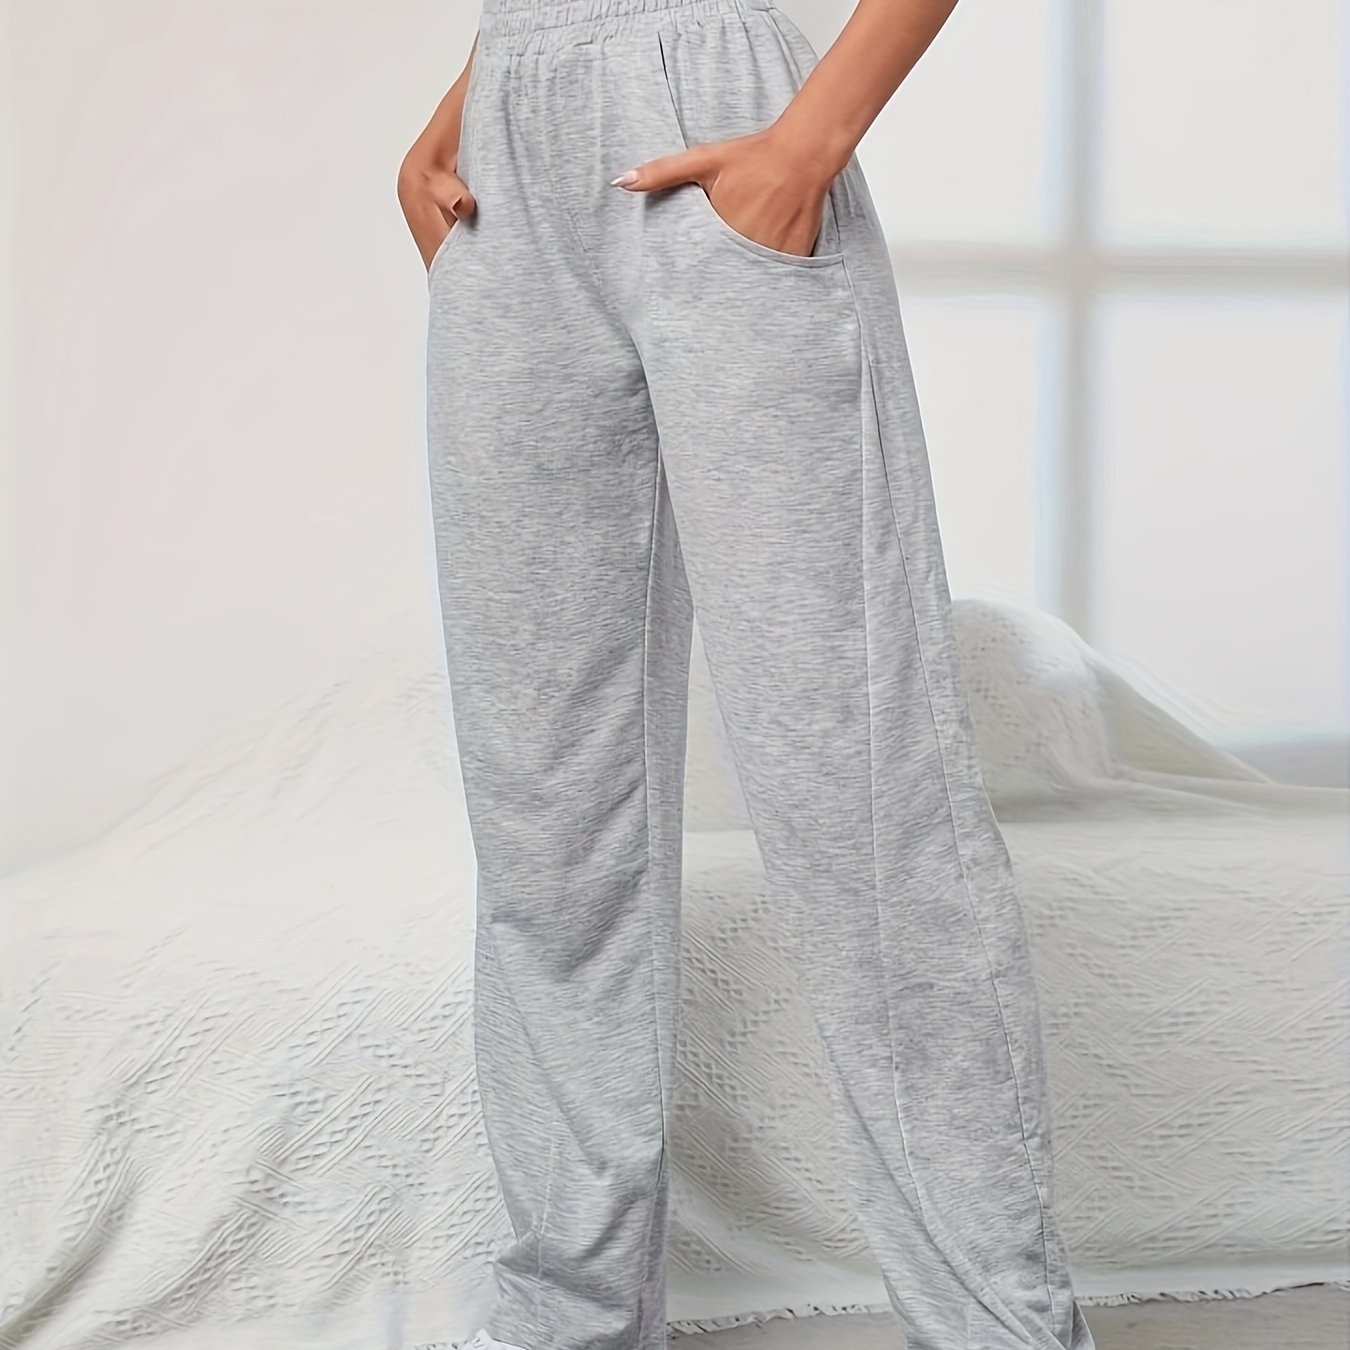 solid color casual sports pants elastic waist running jogging pants womens activewear